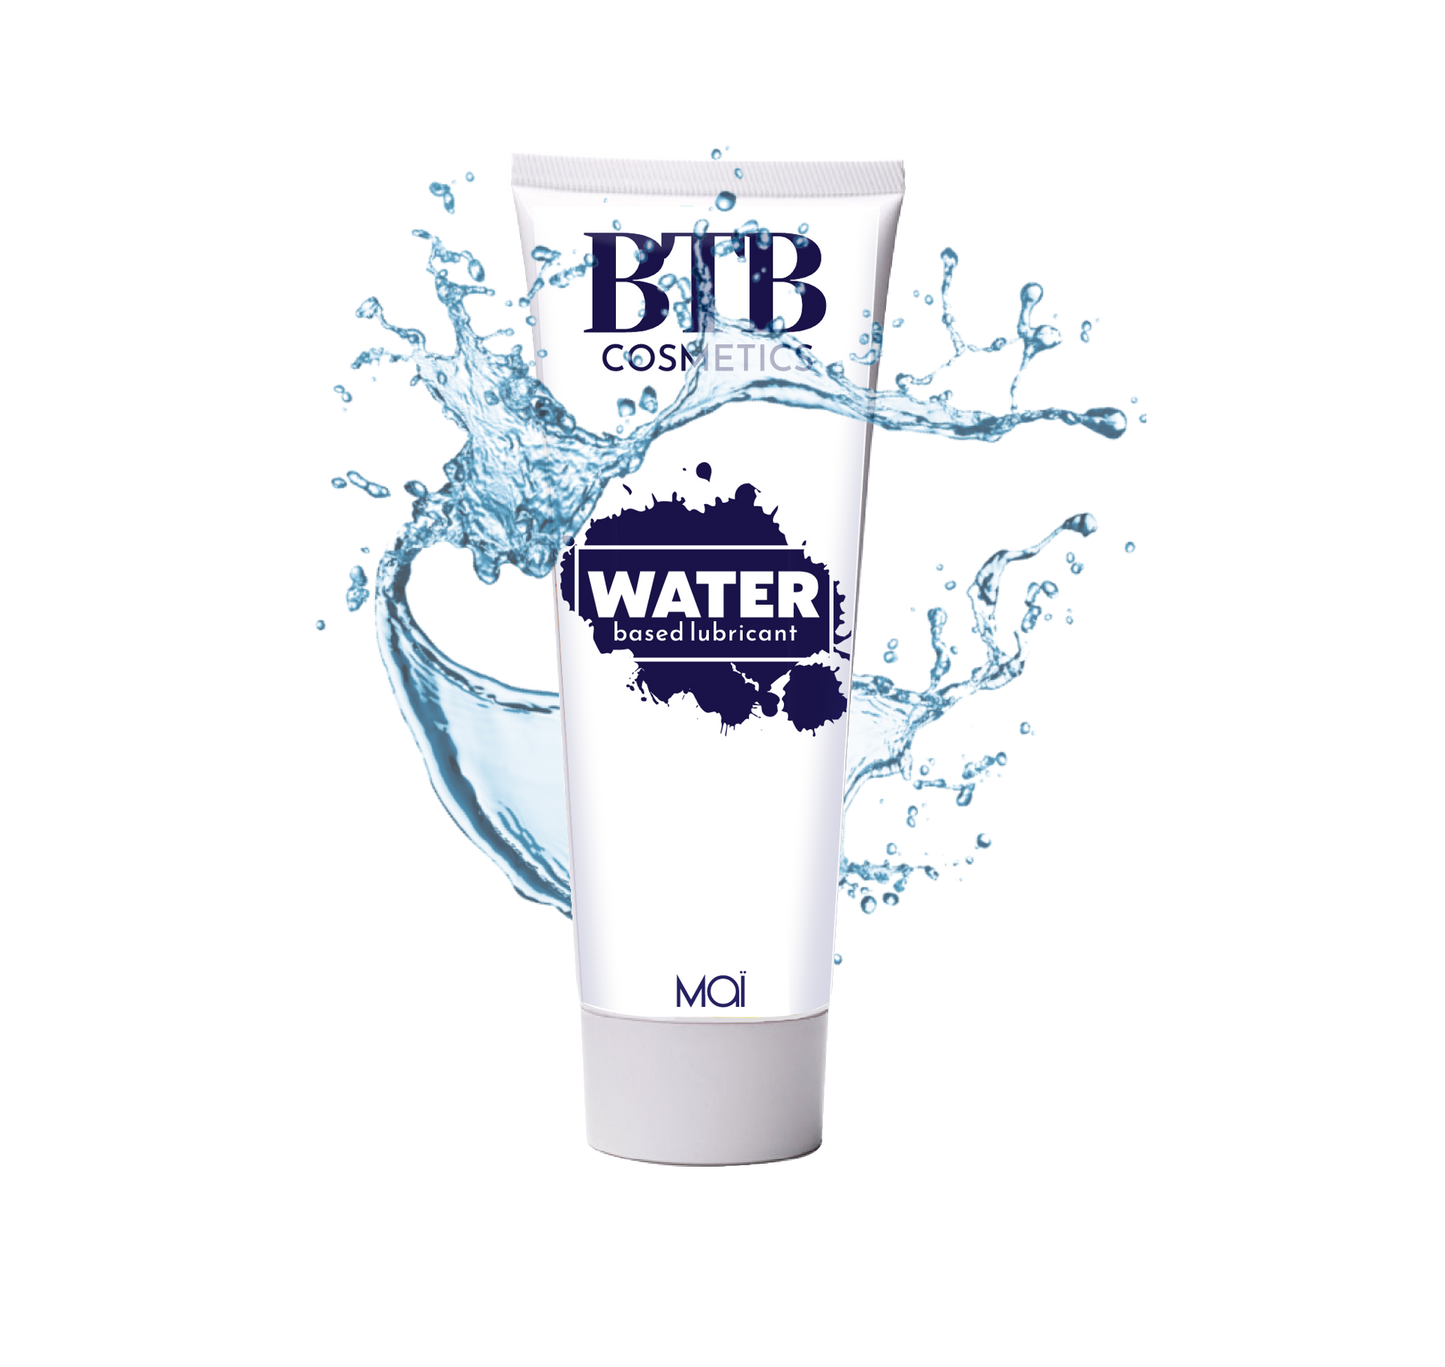 BTB Cosmetics Vegan Water Based Lubricant 100 ML - LT2401